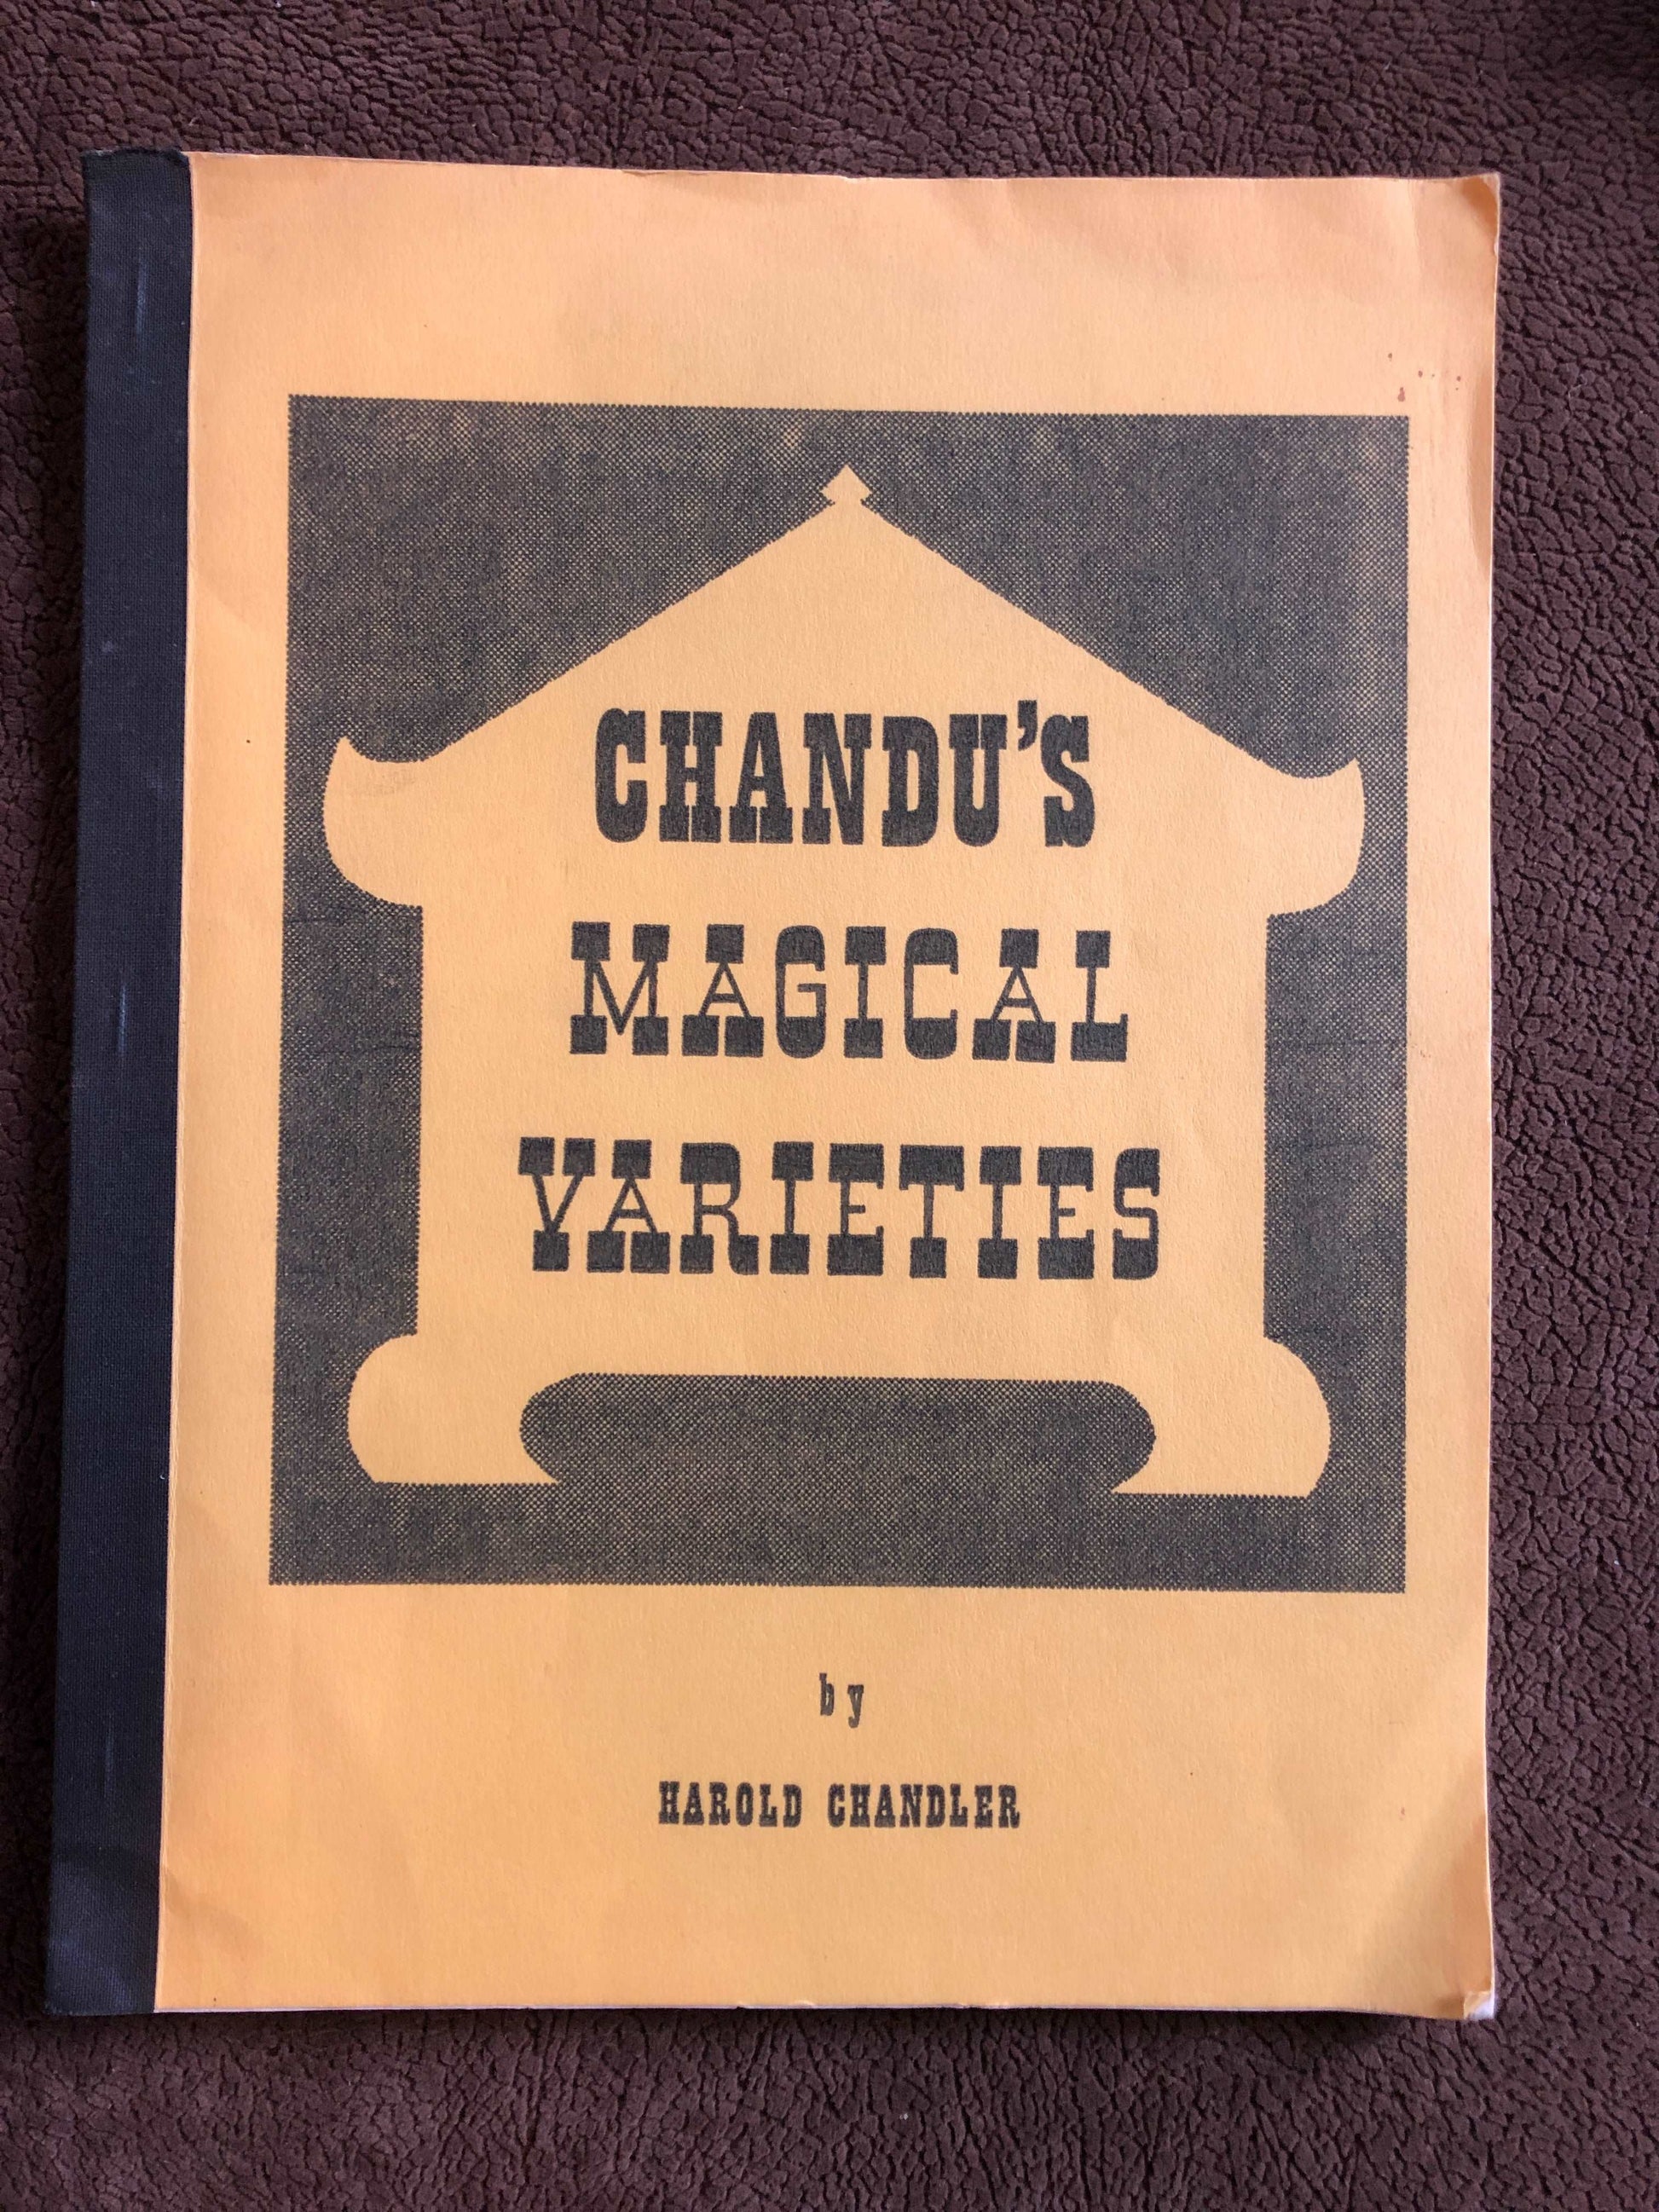 Chandu's Magical Varieties - Harold Chandler